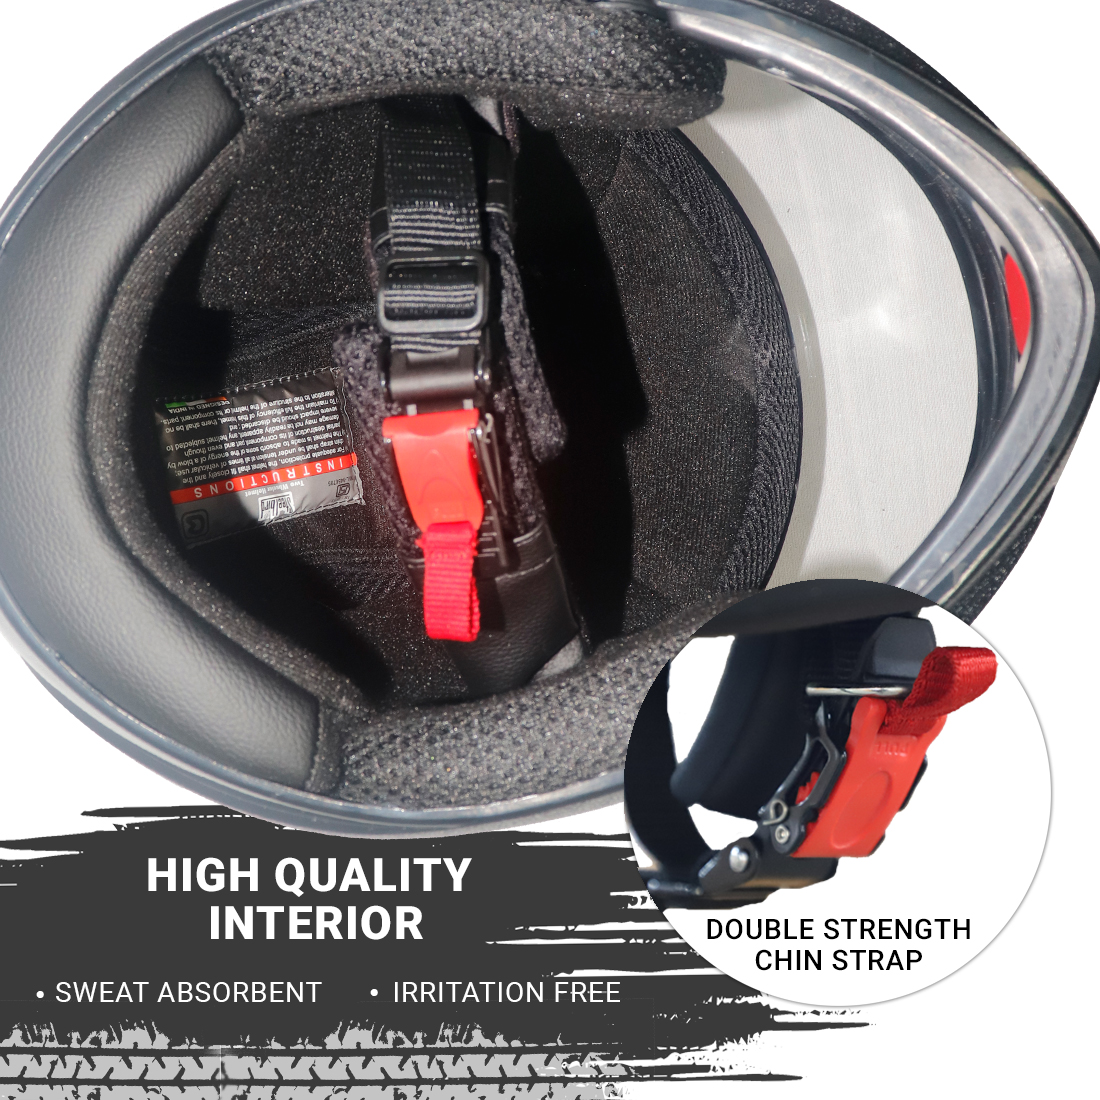 Steelbird SB-45 R2K Oska ISI Certified Flip Up Helmet (Black With Smoke Visor)